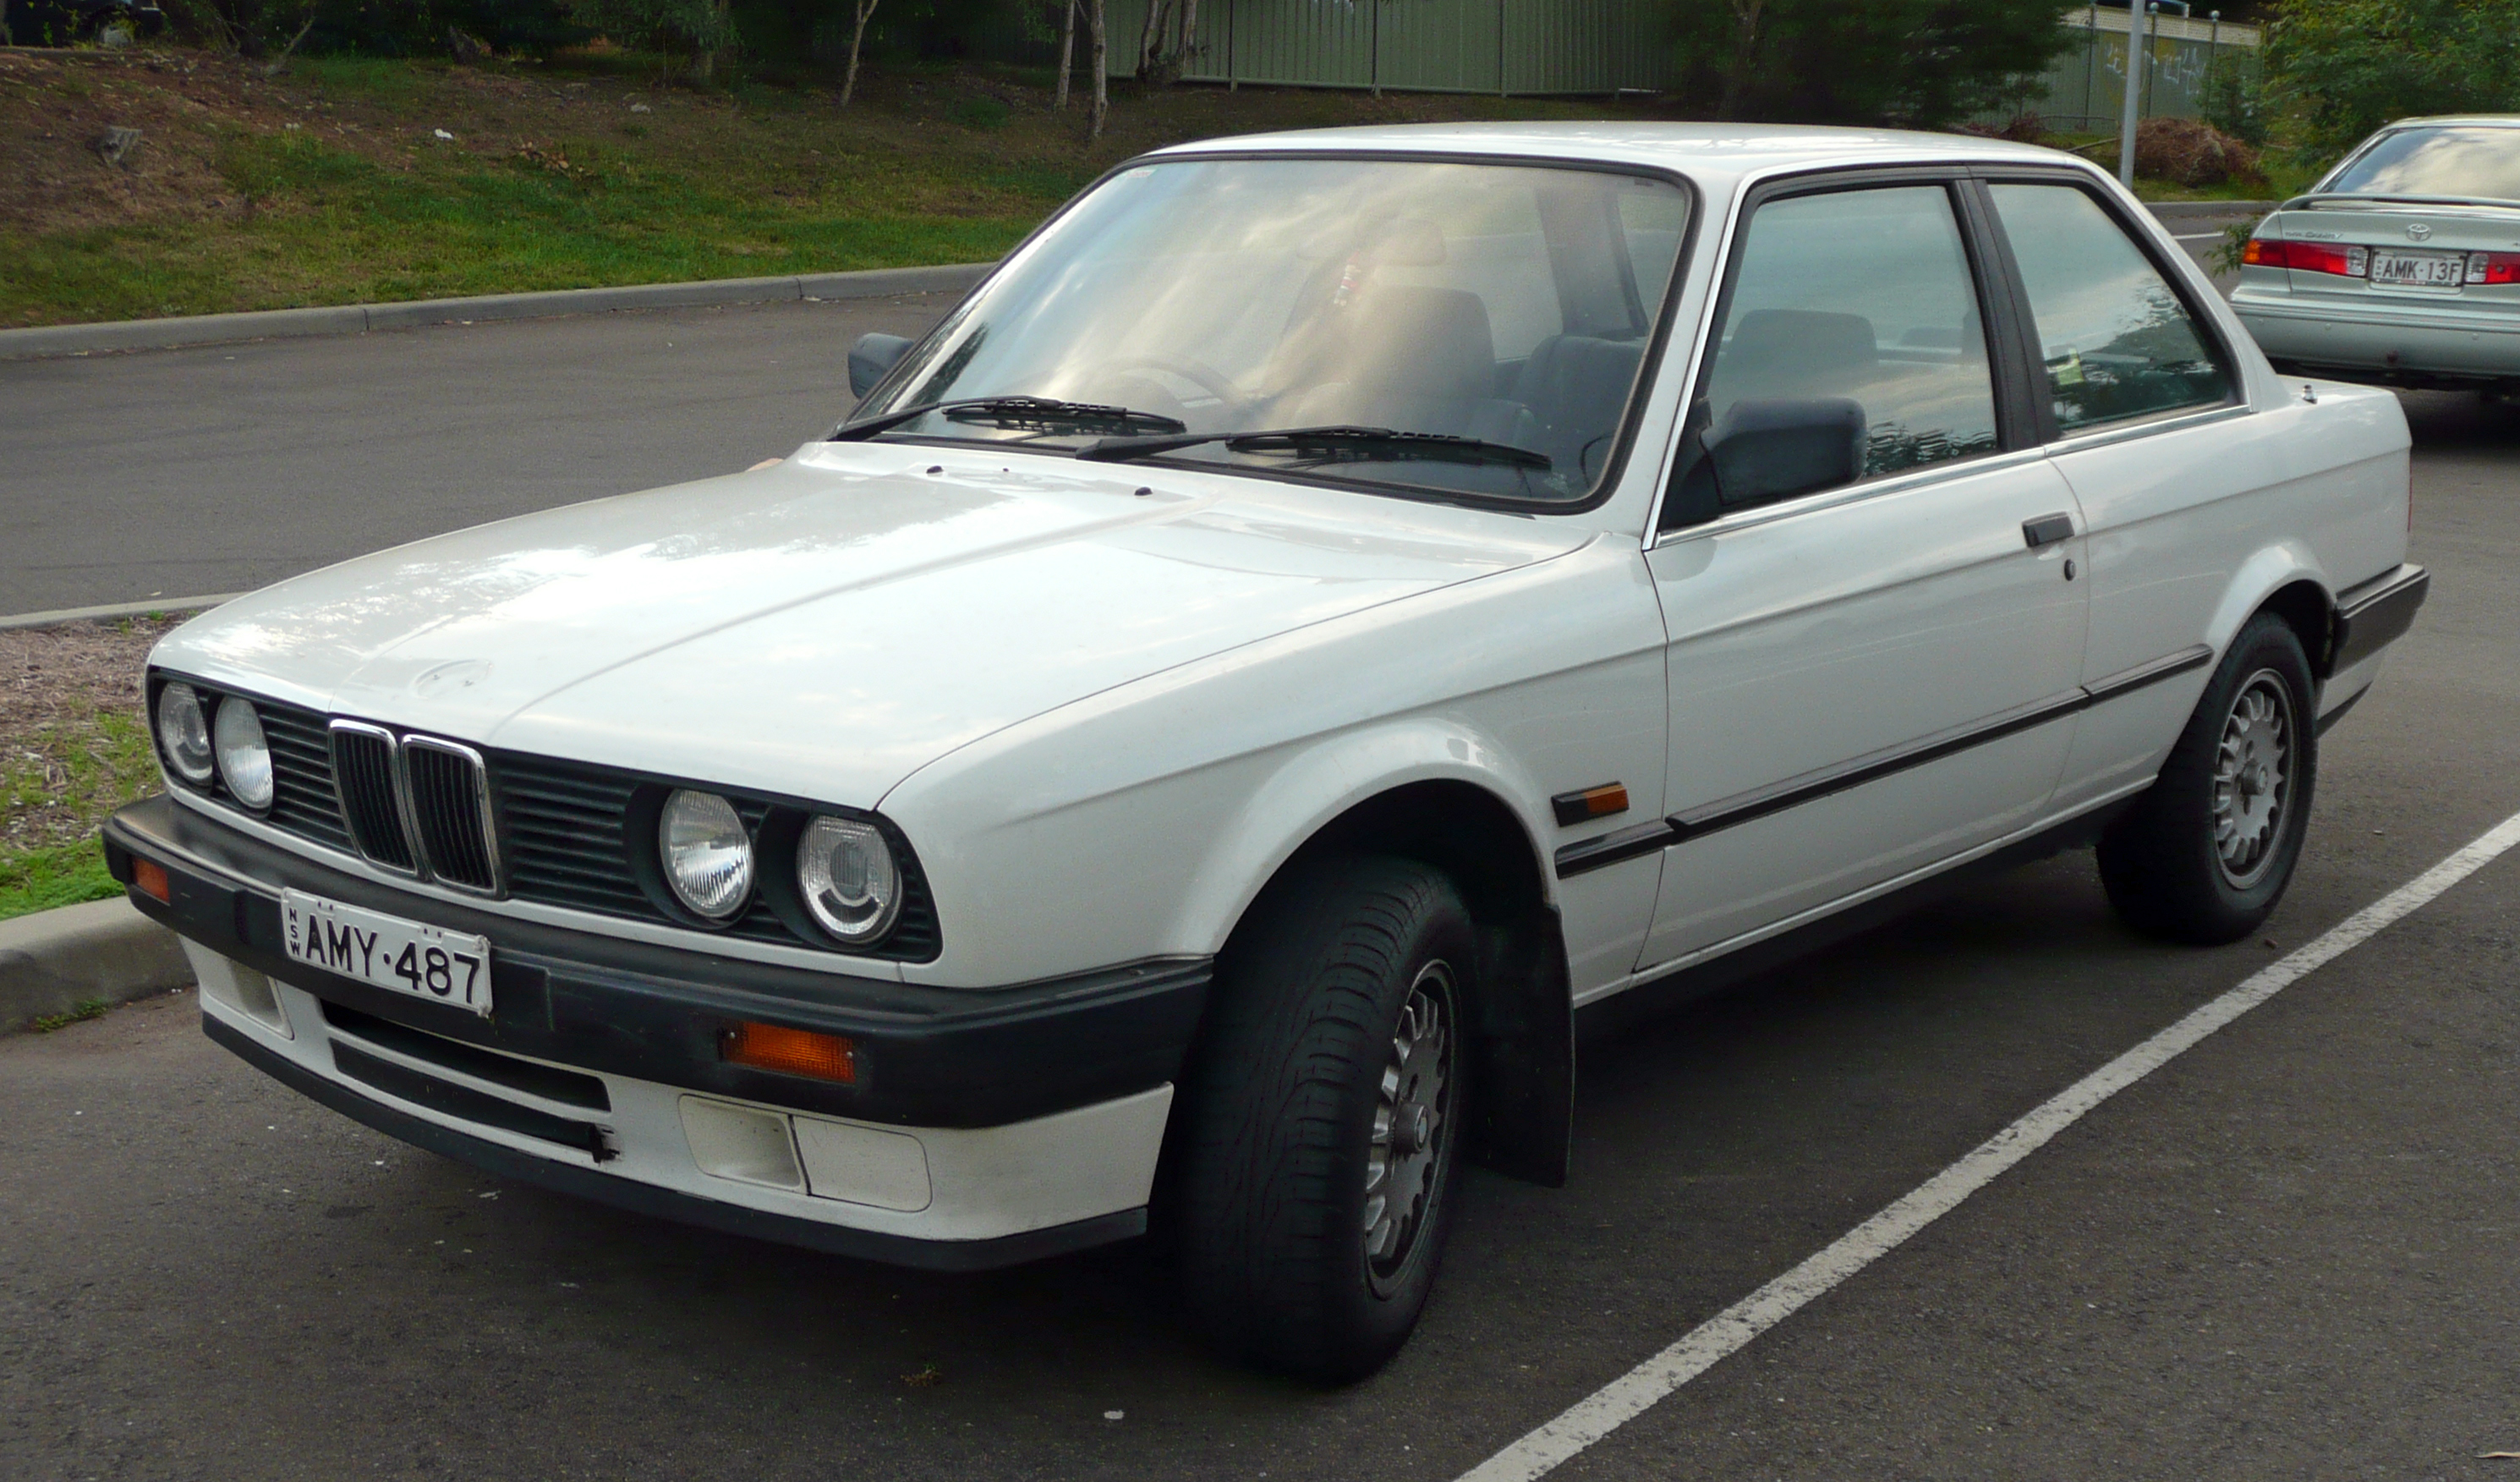 File:1988-1991 BMW 318i (E30) 2-door sedan 01.